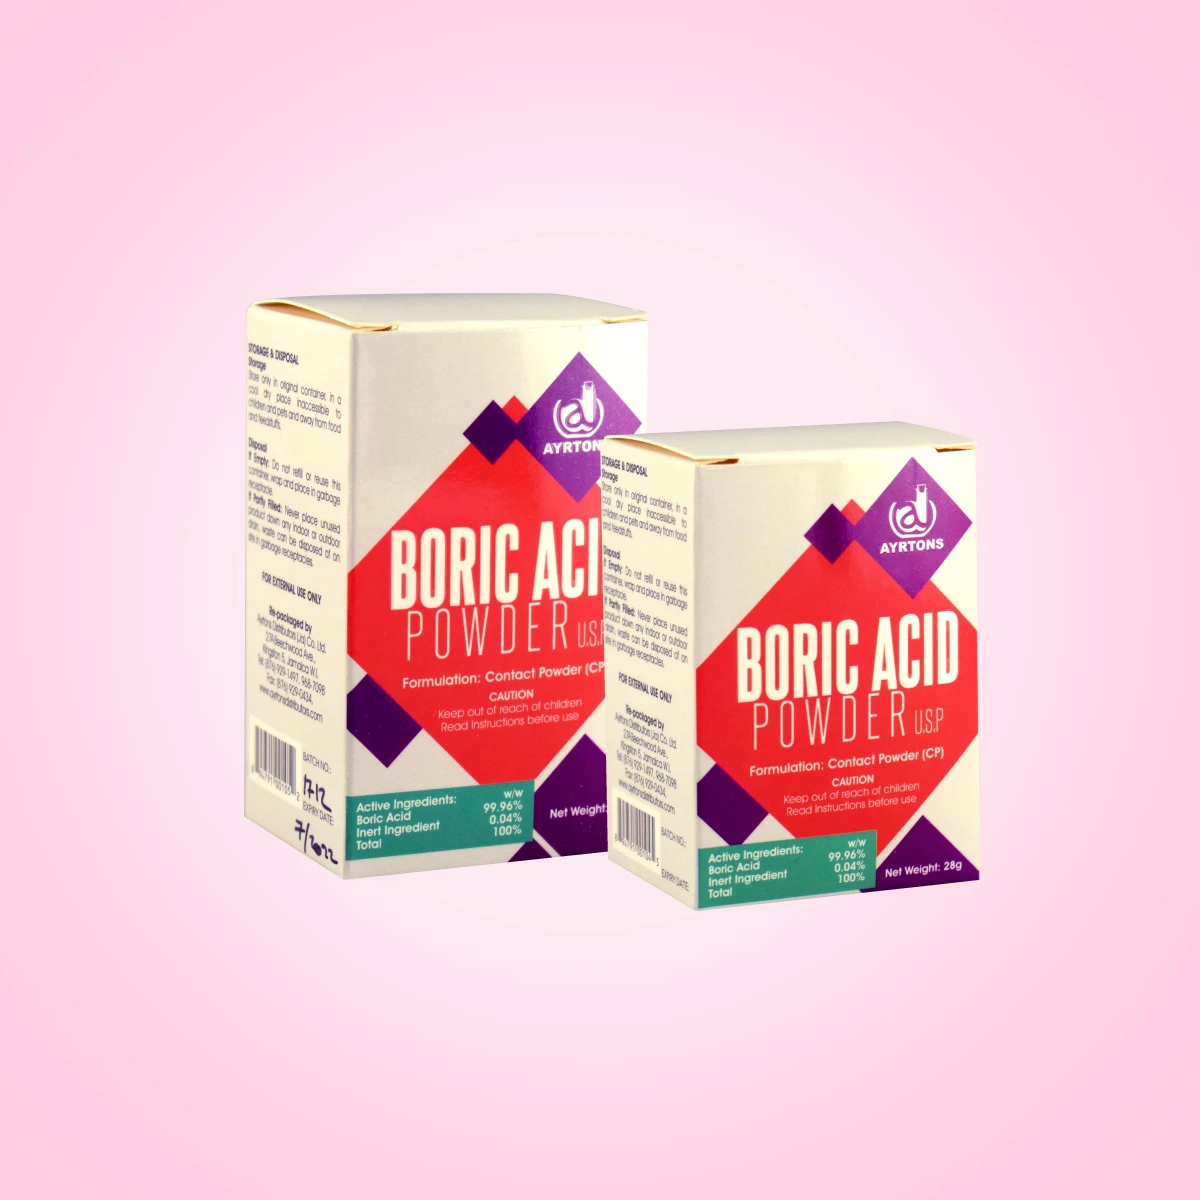 boric acid powder in boxes